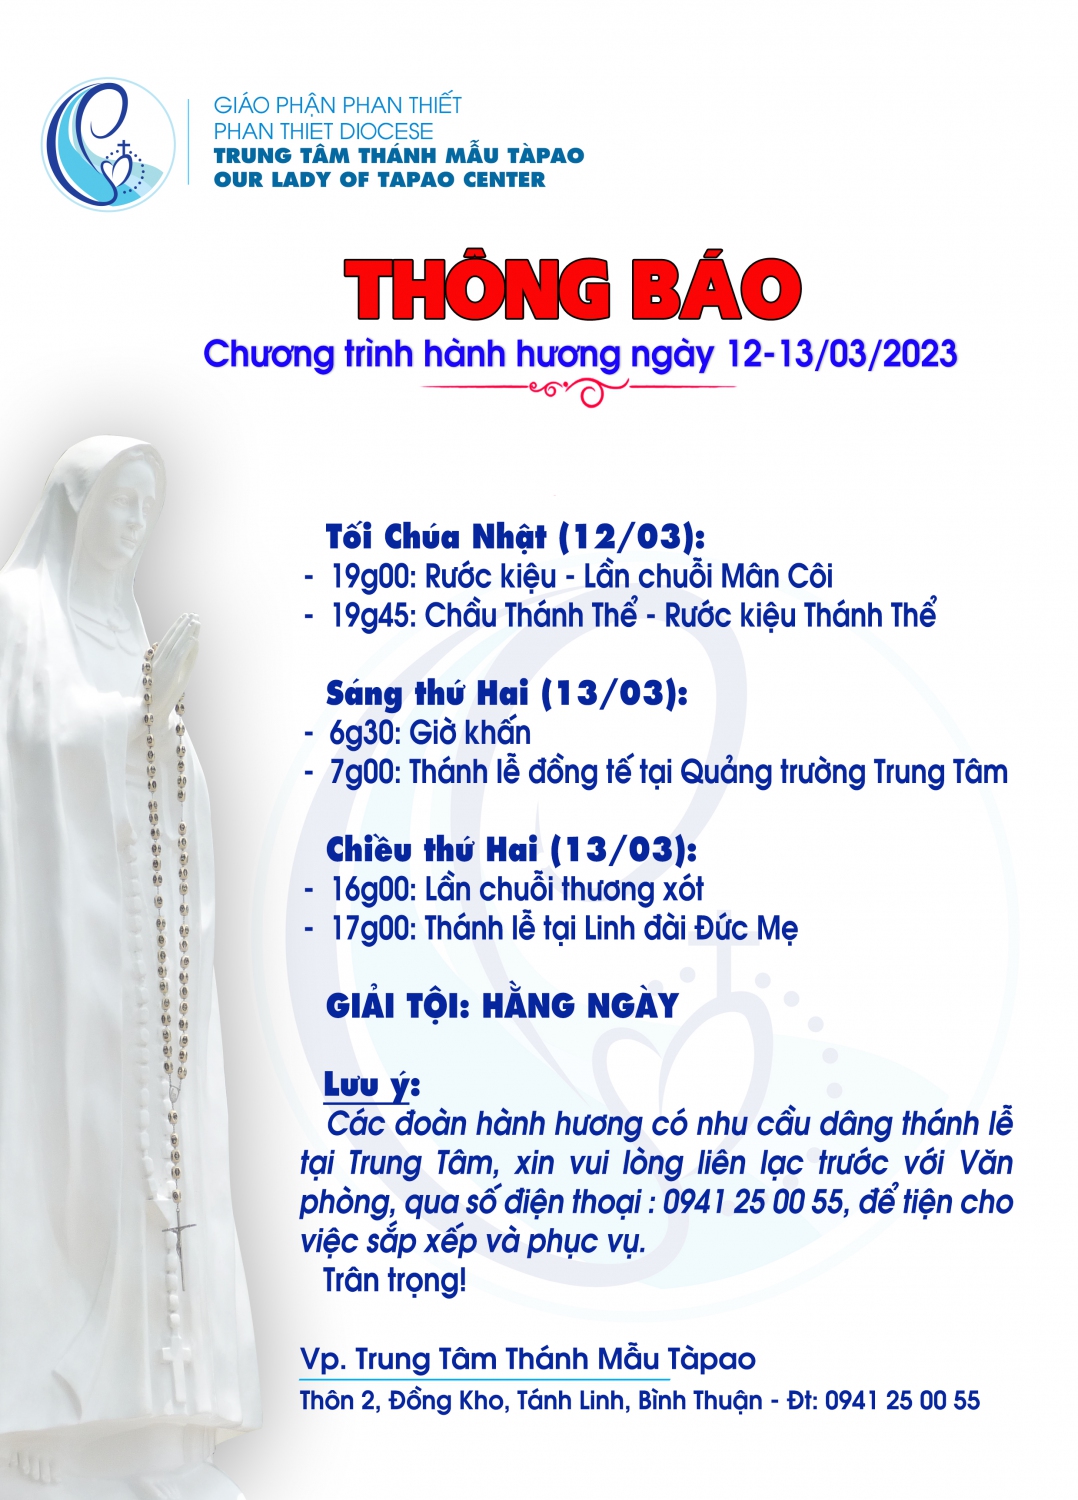 chuong trinh hanh huong thang 03